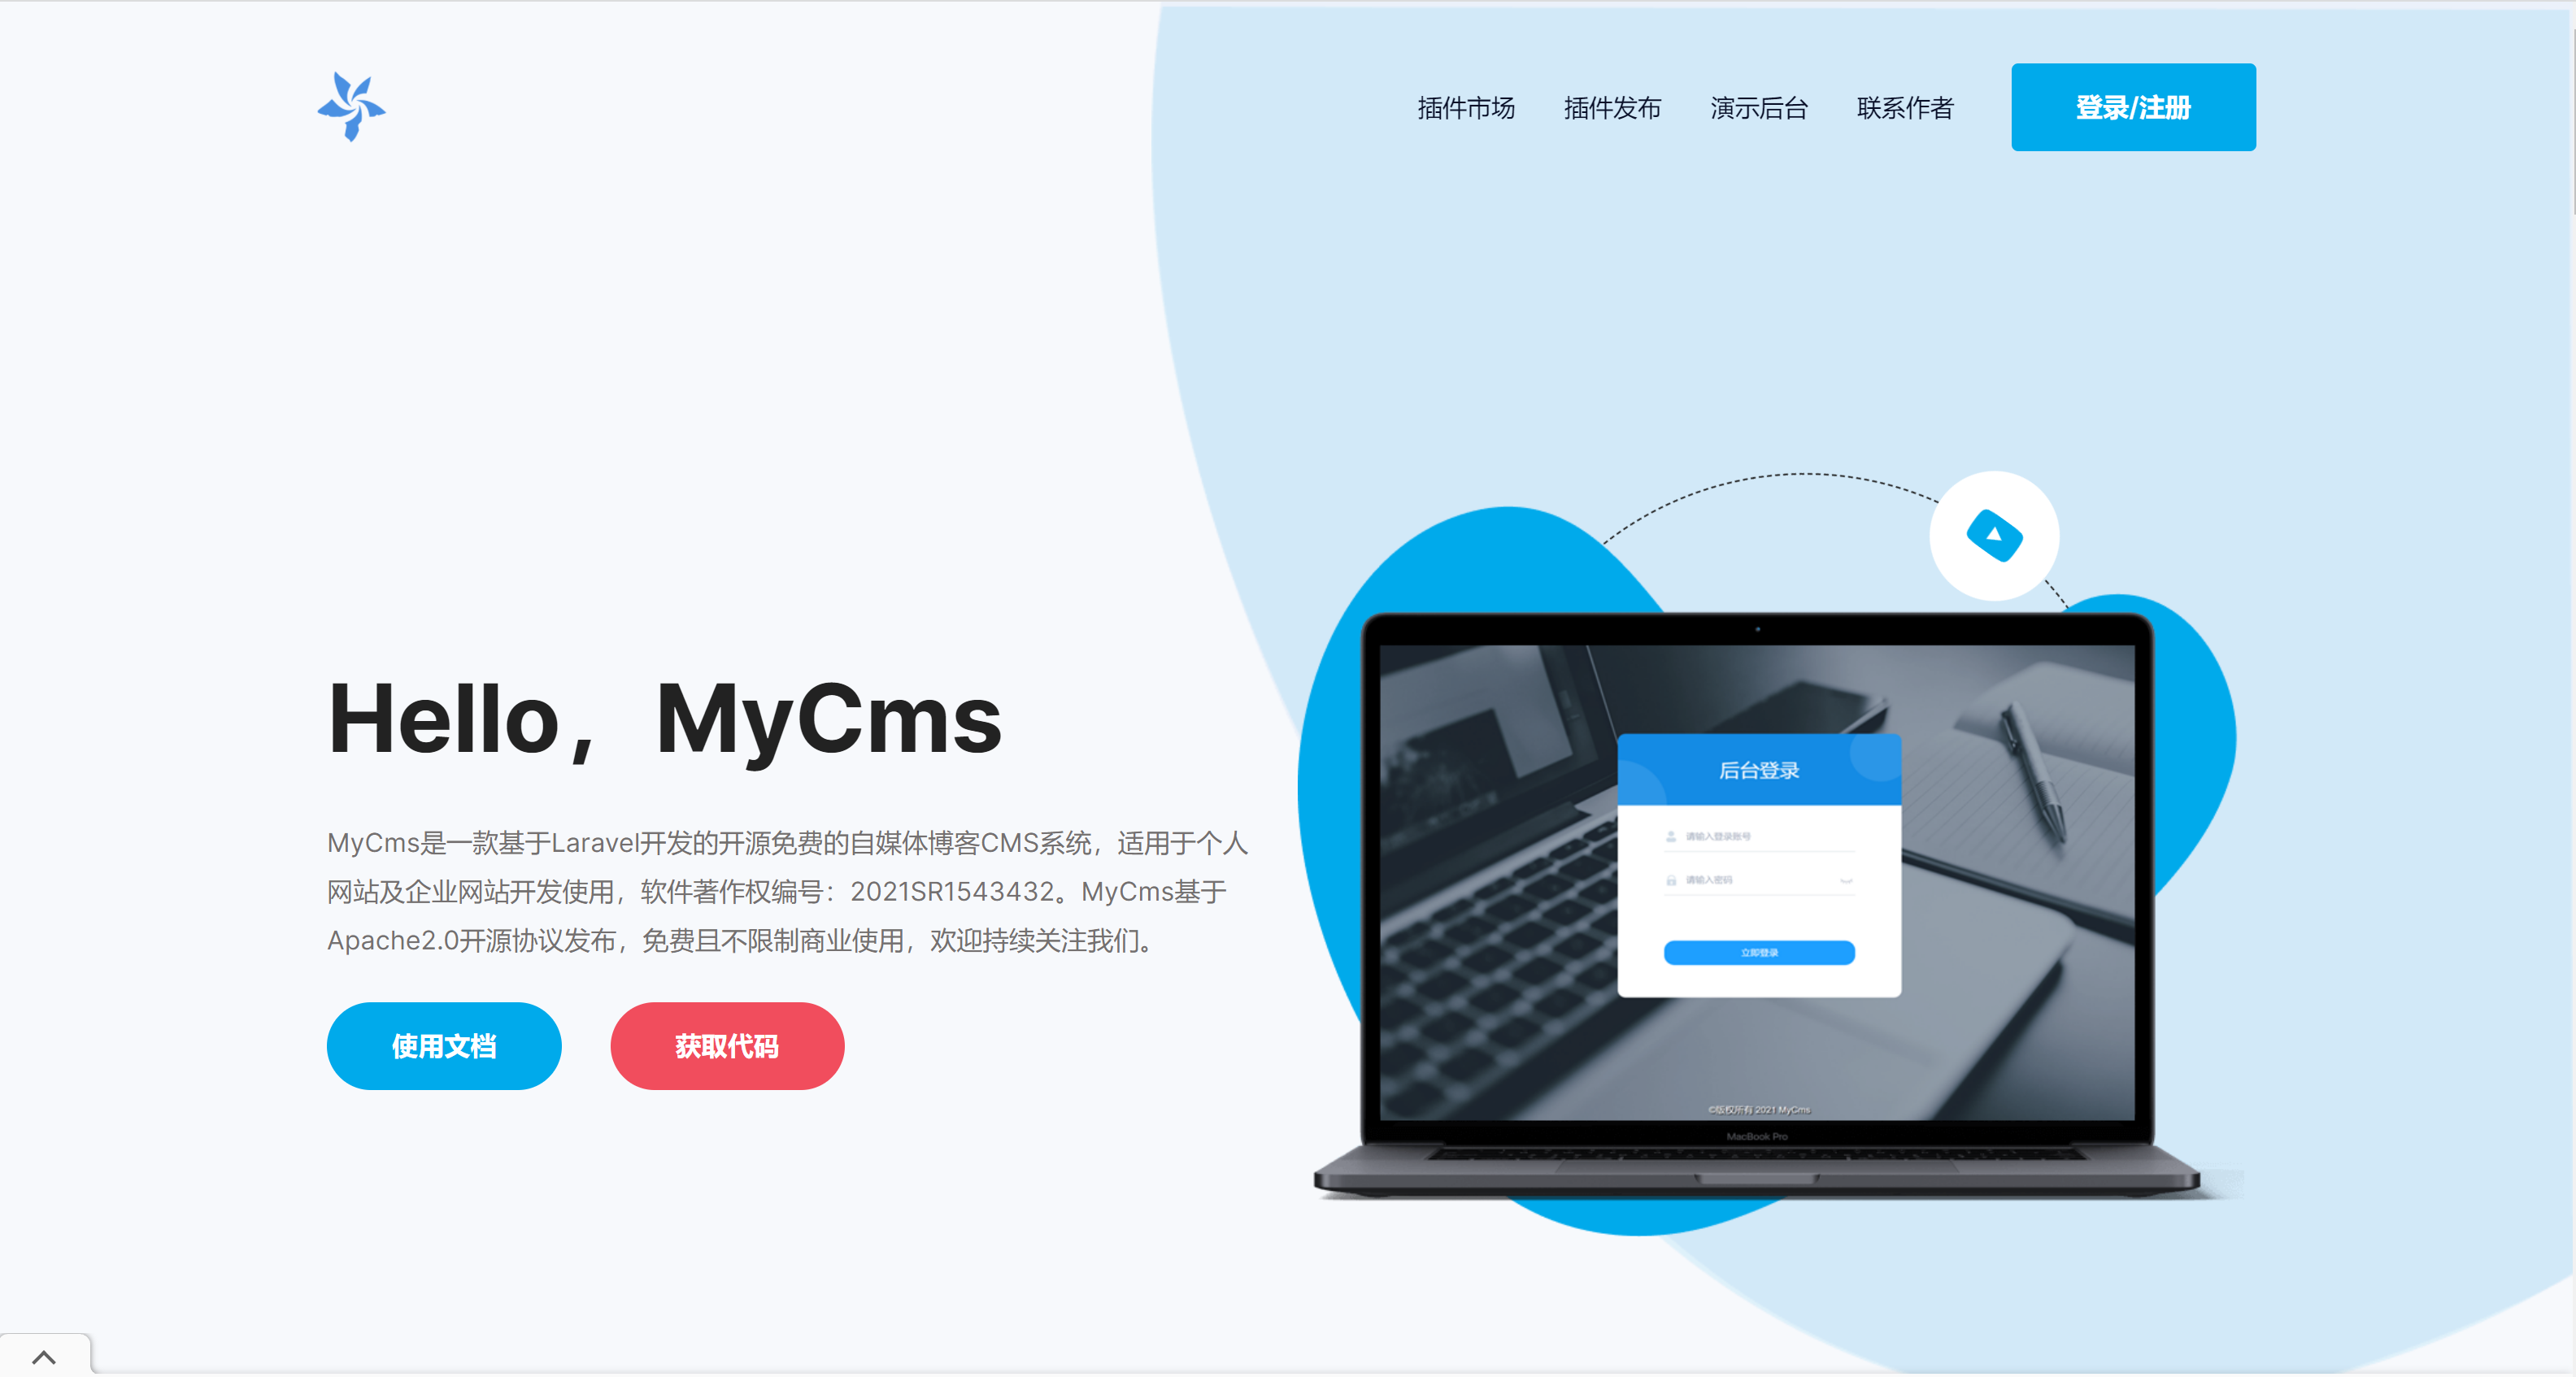 MyCms 自媒体 CMS 系统 v2.5，后台一键升级更新